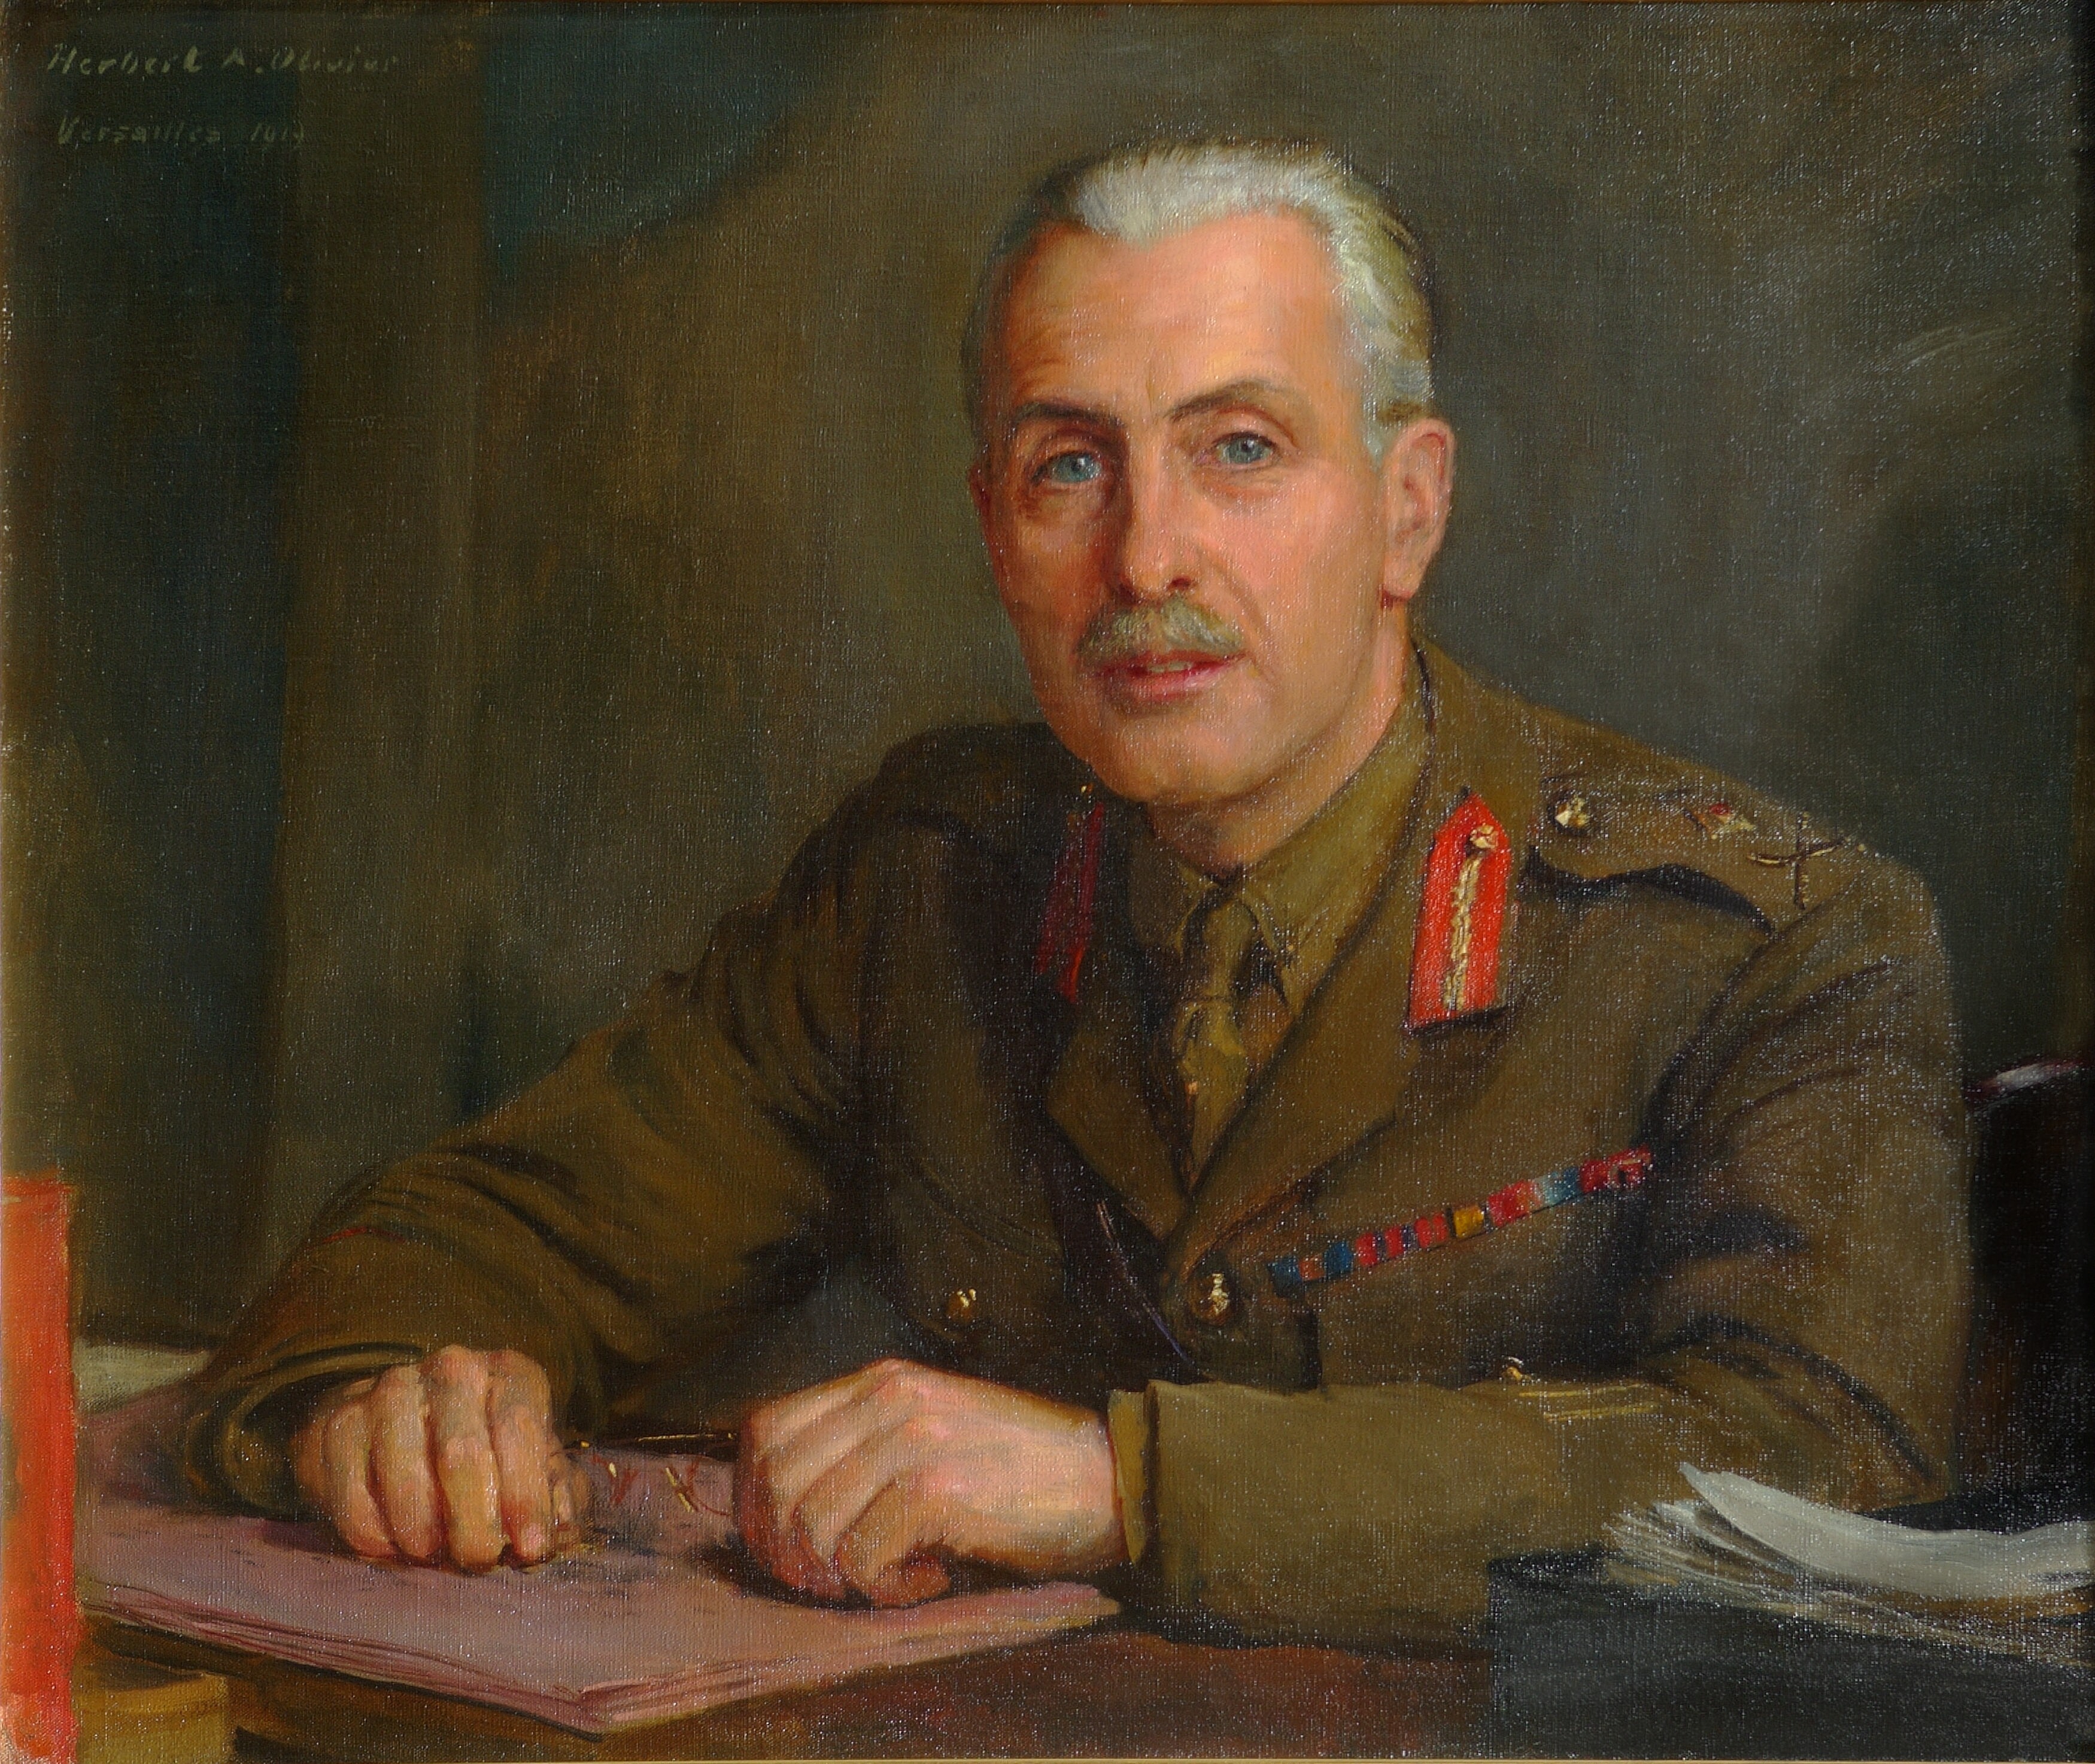 Page general. Херберт Киченер генерал. Генерал арт портрет. Арты Генерала.